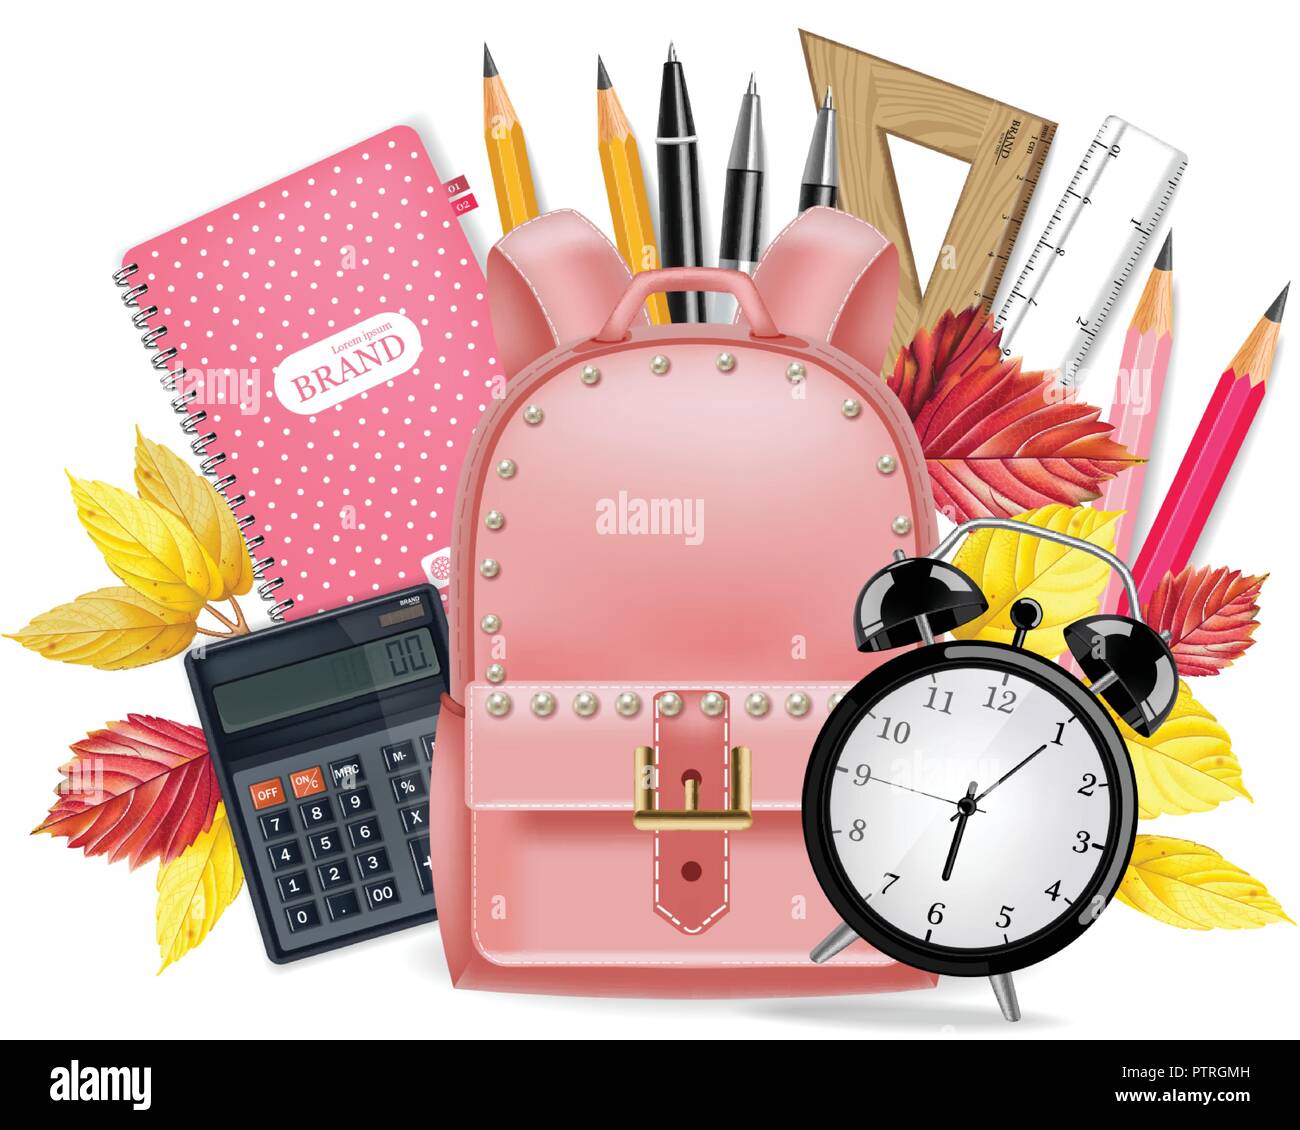 https://c8.alamy.com/comp/PTRGMH/back-to-school-card-vector-realistic-school-supplies-pink-satchel-alarm-clock-calculator-note-book-rulers-and-pen-tools-detailed-3d-illustratio-PTRGMH.jpg